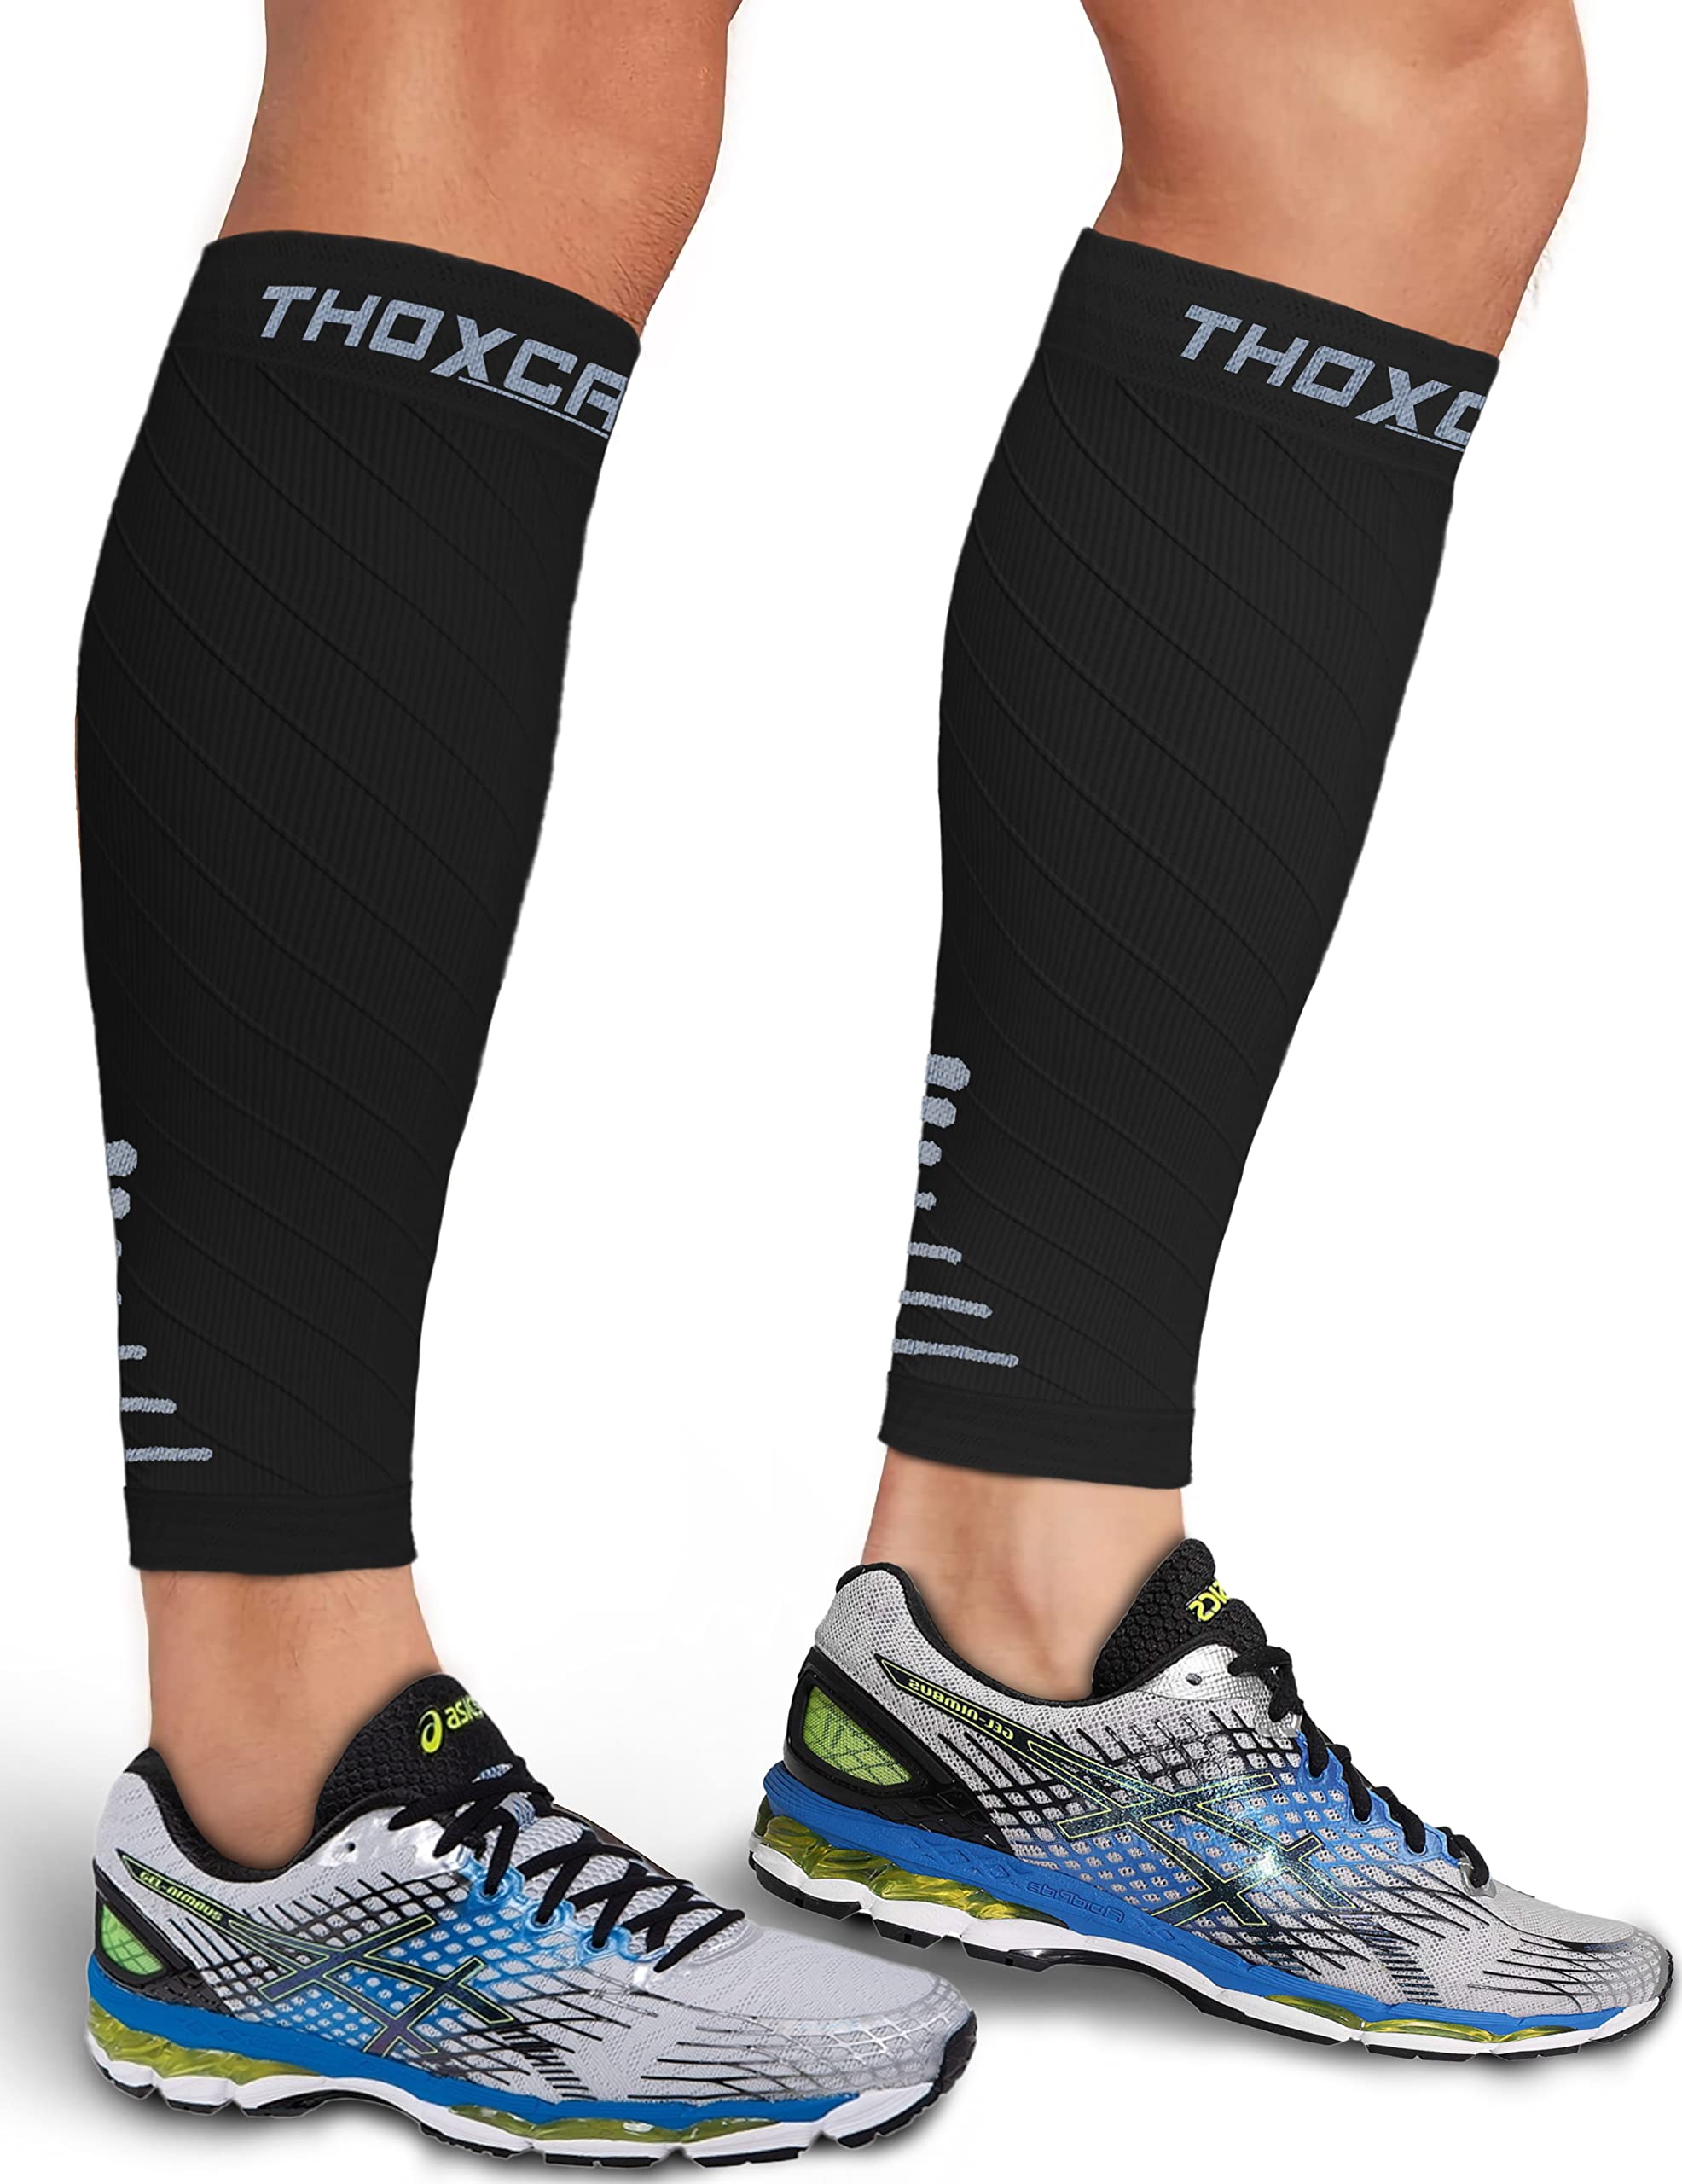 Calf Compression Sleeves For Men And Women - Leg Compression Sleeve -  Footless Compression Socks for Runners, Shin Splints, Varicose Vein & Calf  Pain